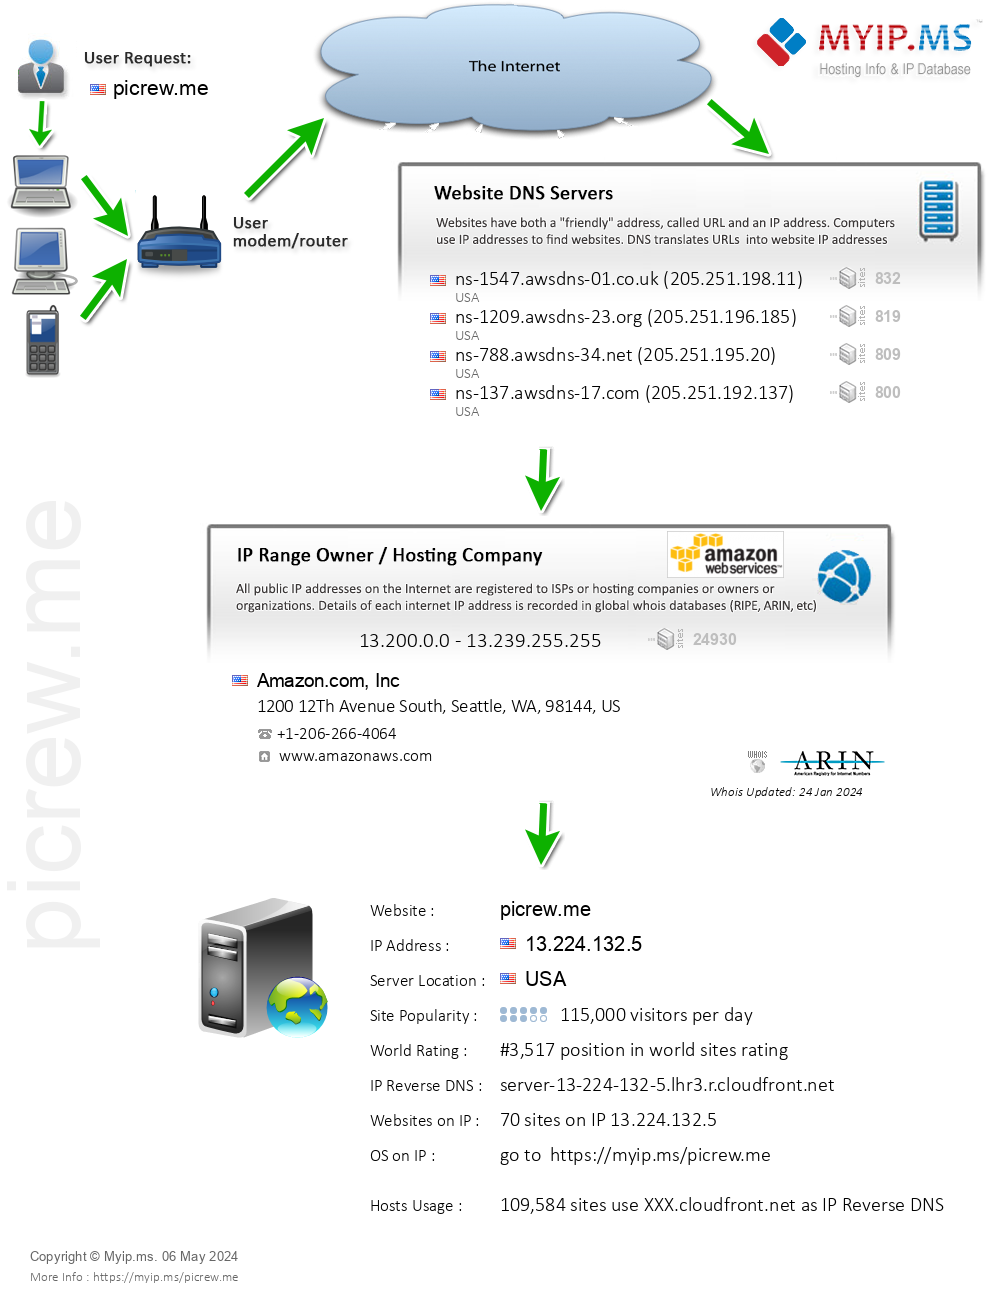 Picrew.me - Website Hosting Visual IP Diagram